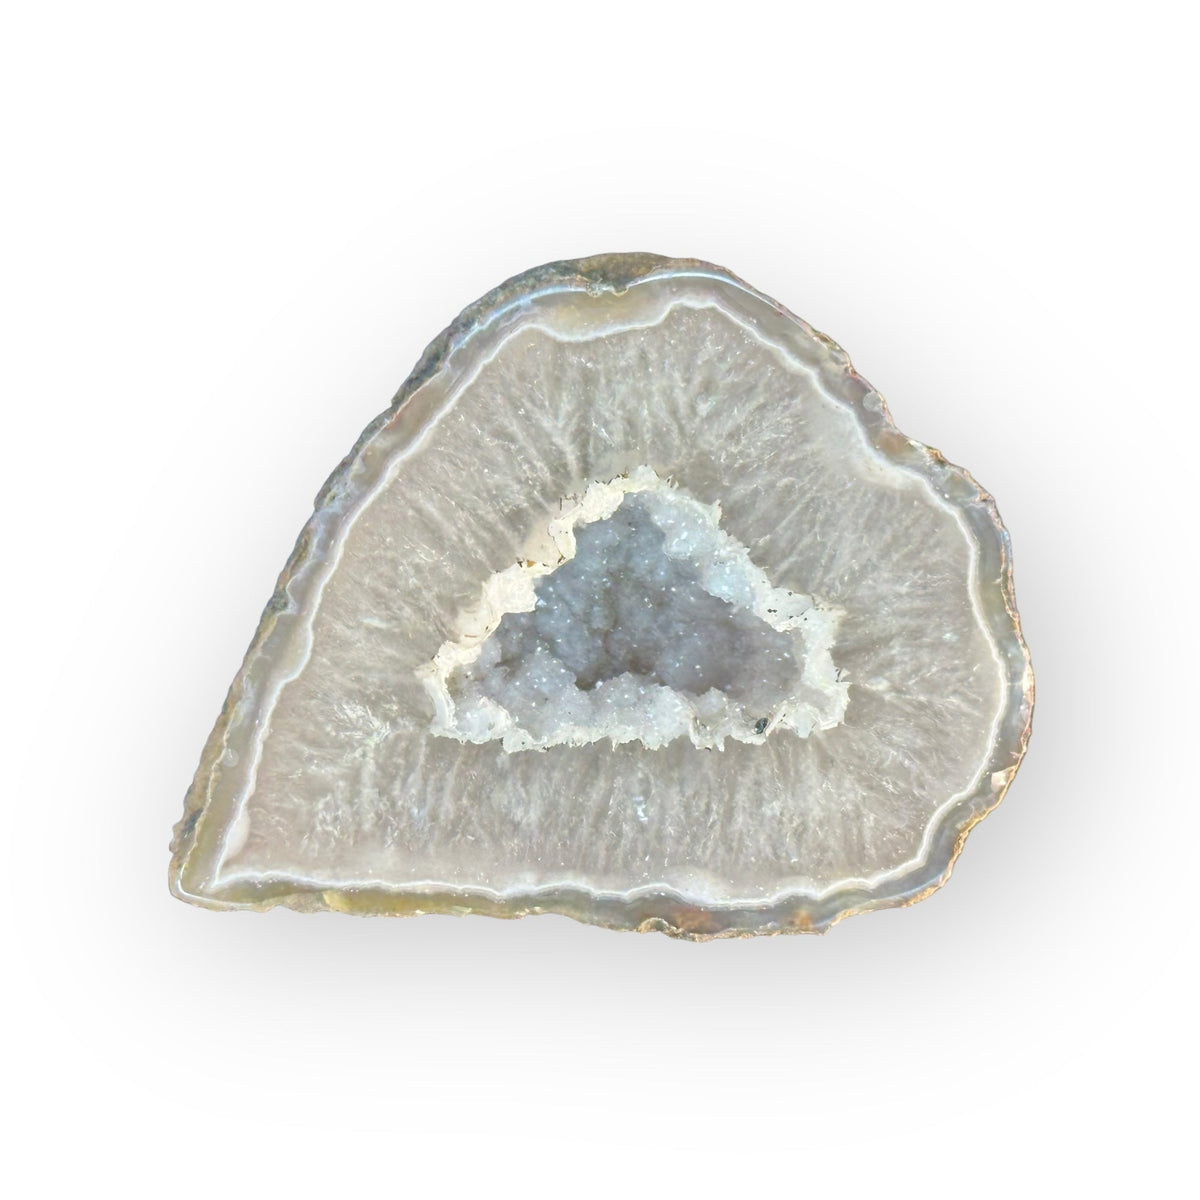 COYAMITO AGATE 22 - Del Rey Agates Gems & Minerals Inc.